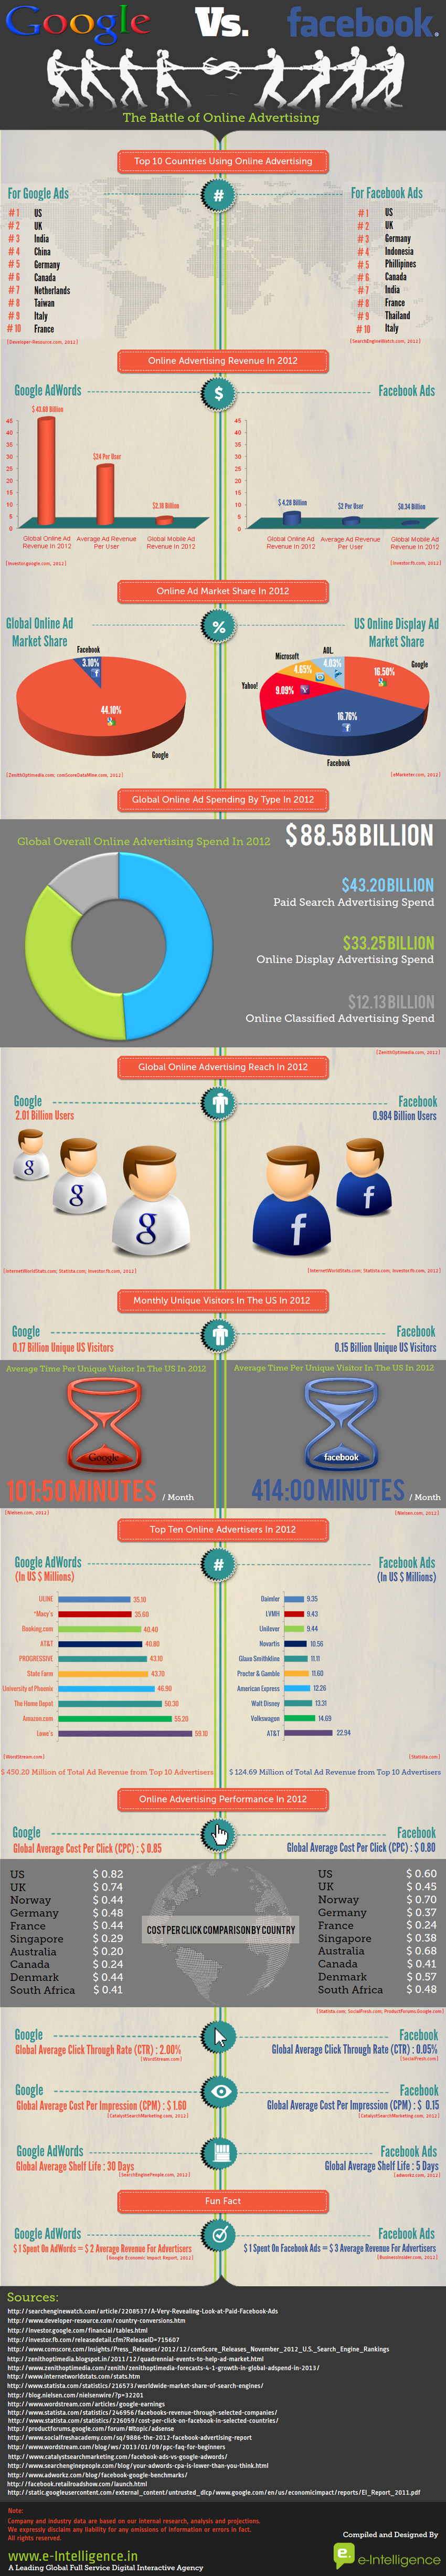 [Infographic] Google vs. Facebook Battle of Online Advertising - e-Intelligence | The MarTech Digest | Scoop.it